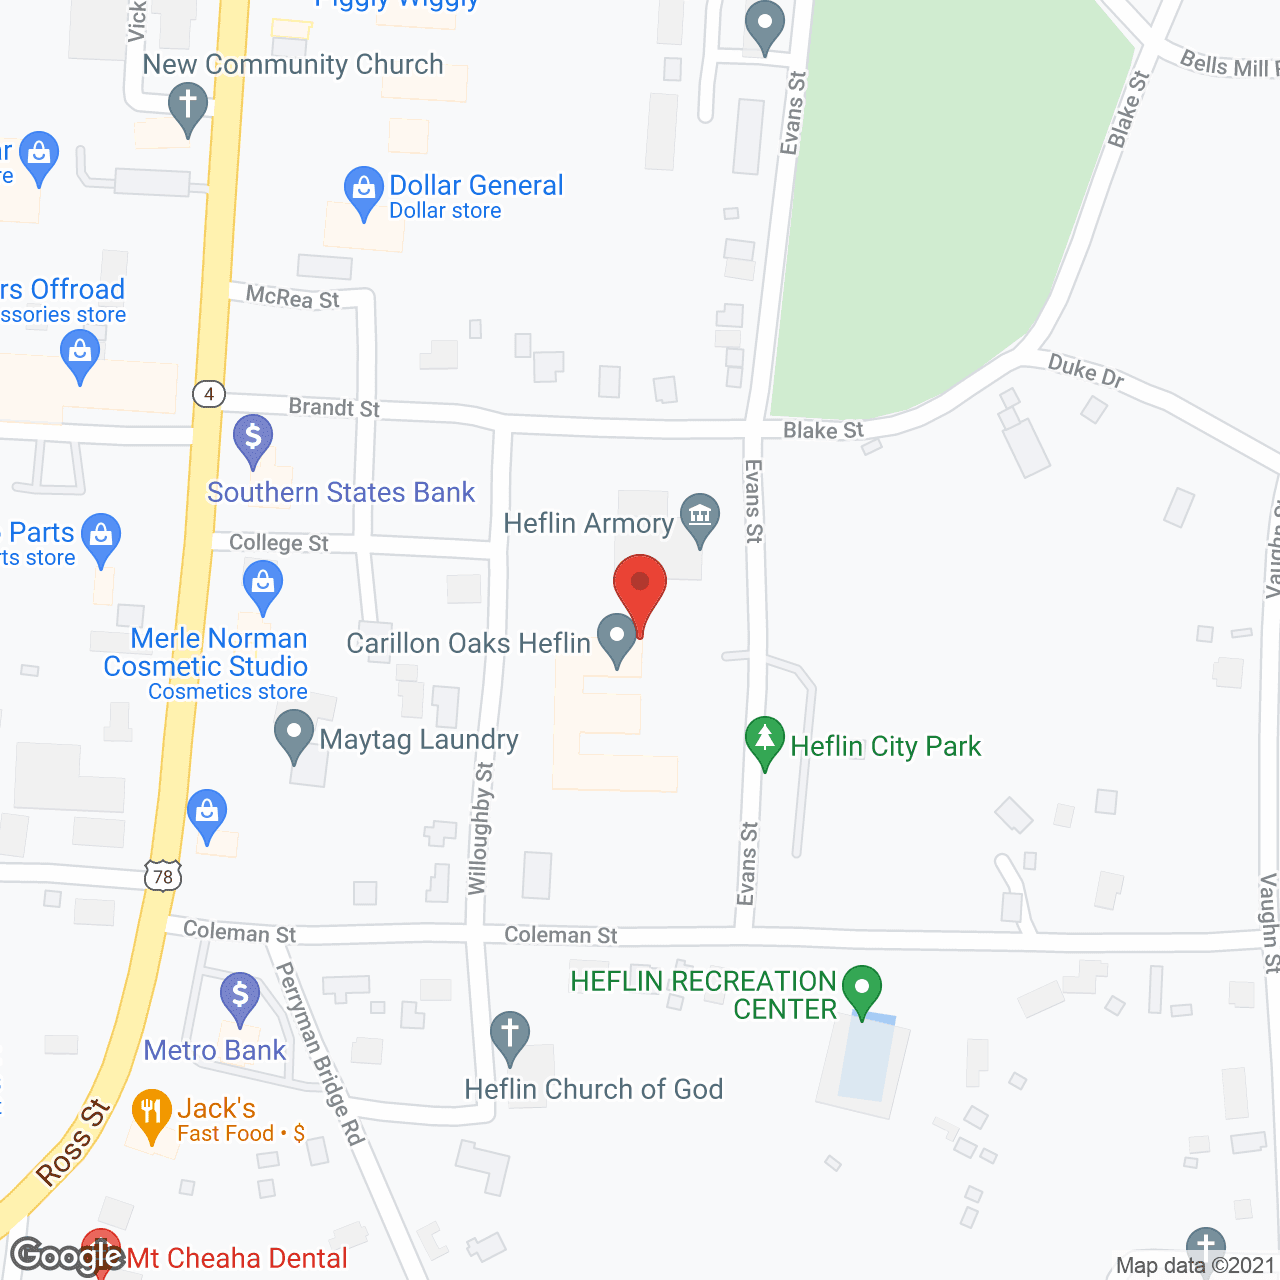 Carillon Oaks Heflin in google map